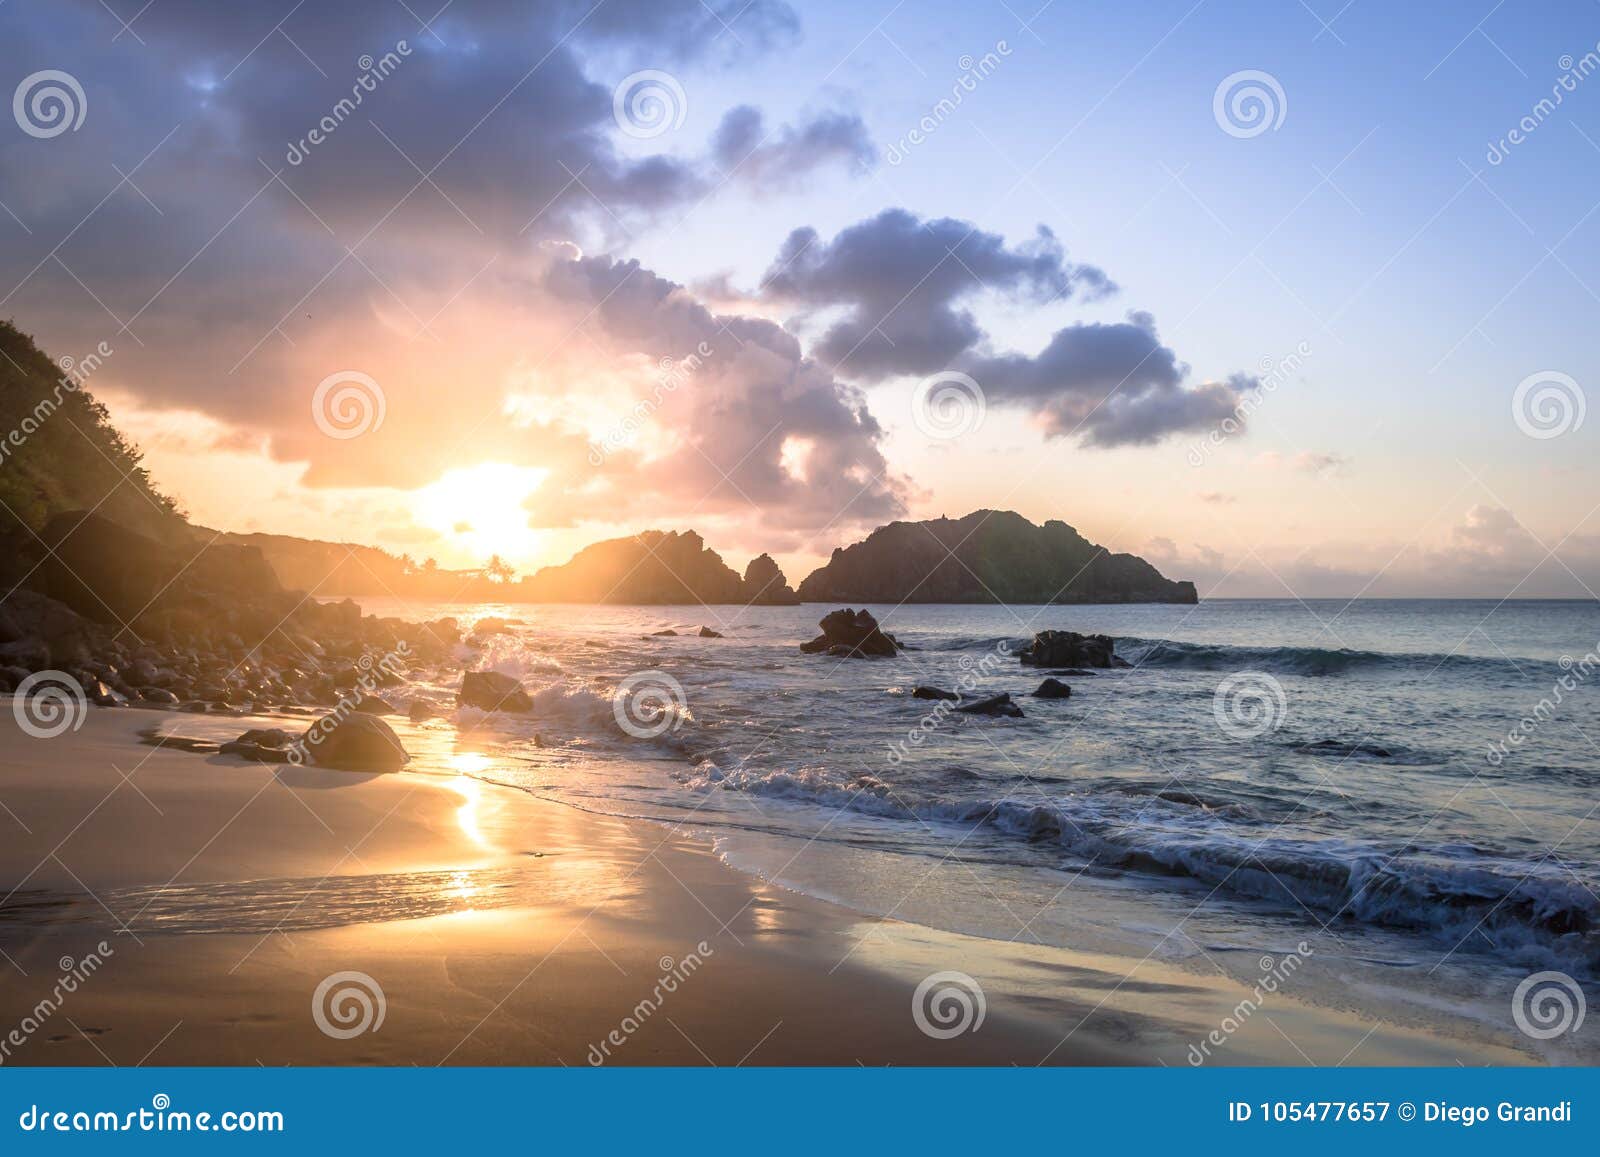 sunset at praia do cachorro beach - fernando de noronha, pernambuco, brazil